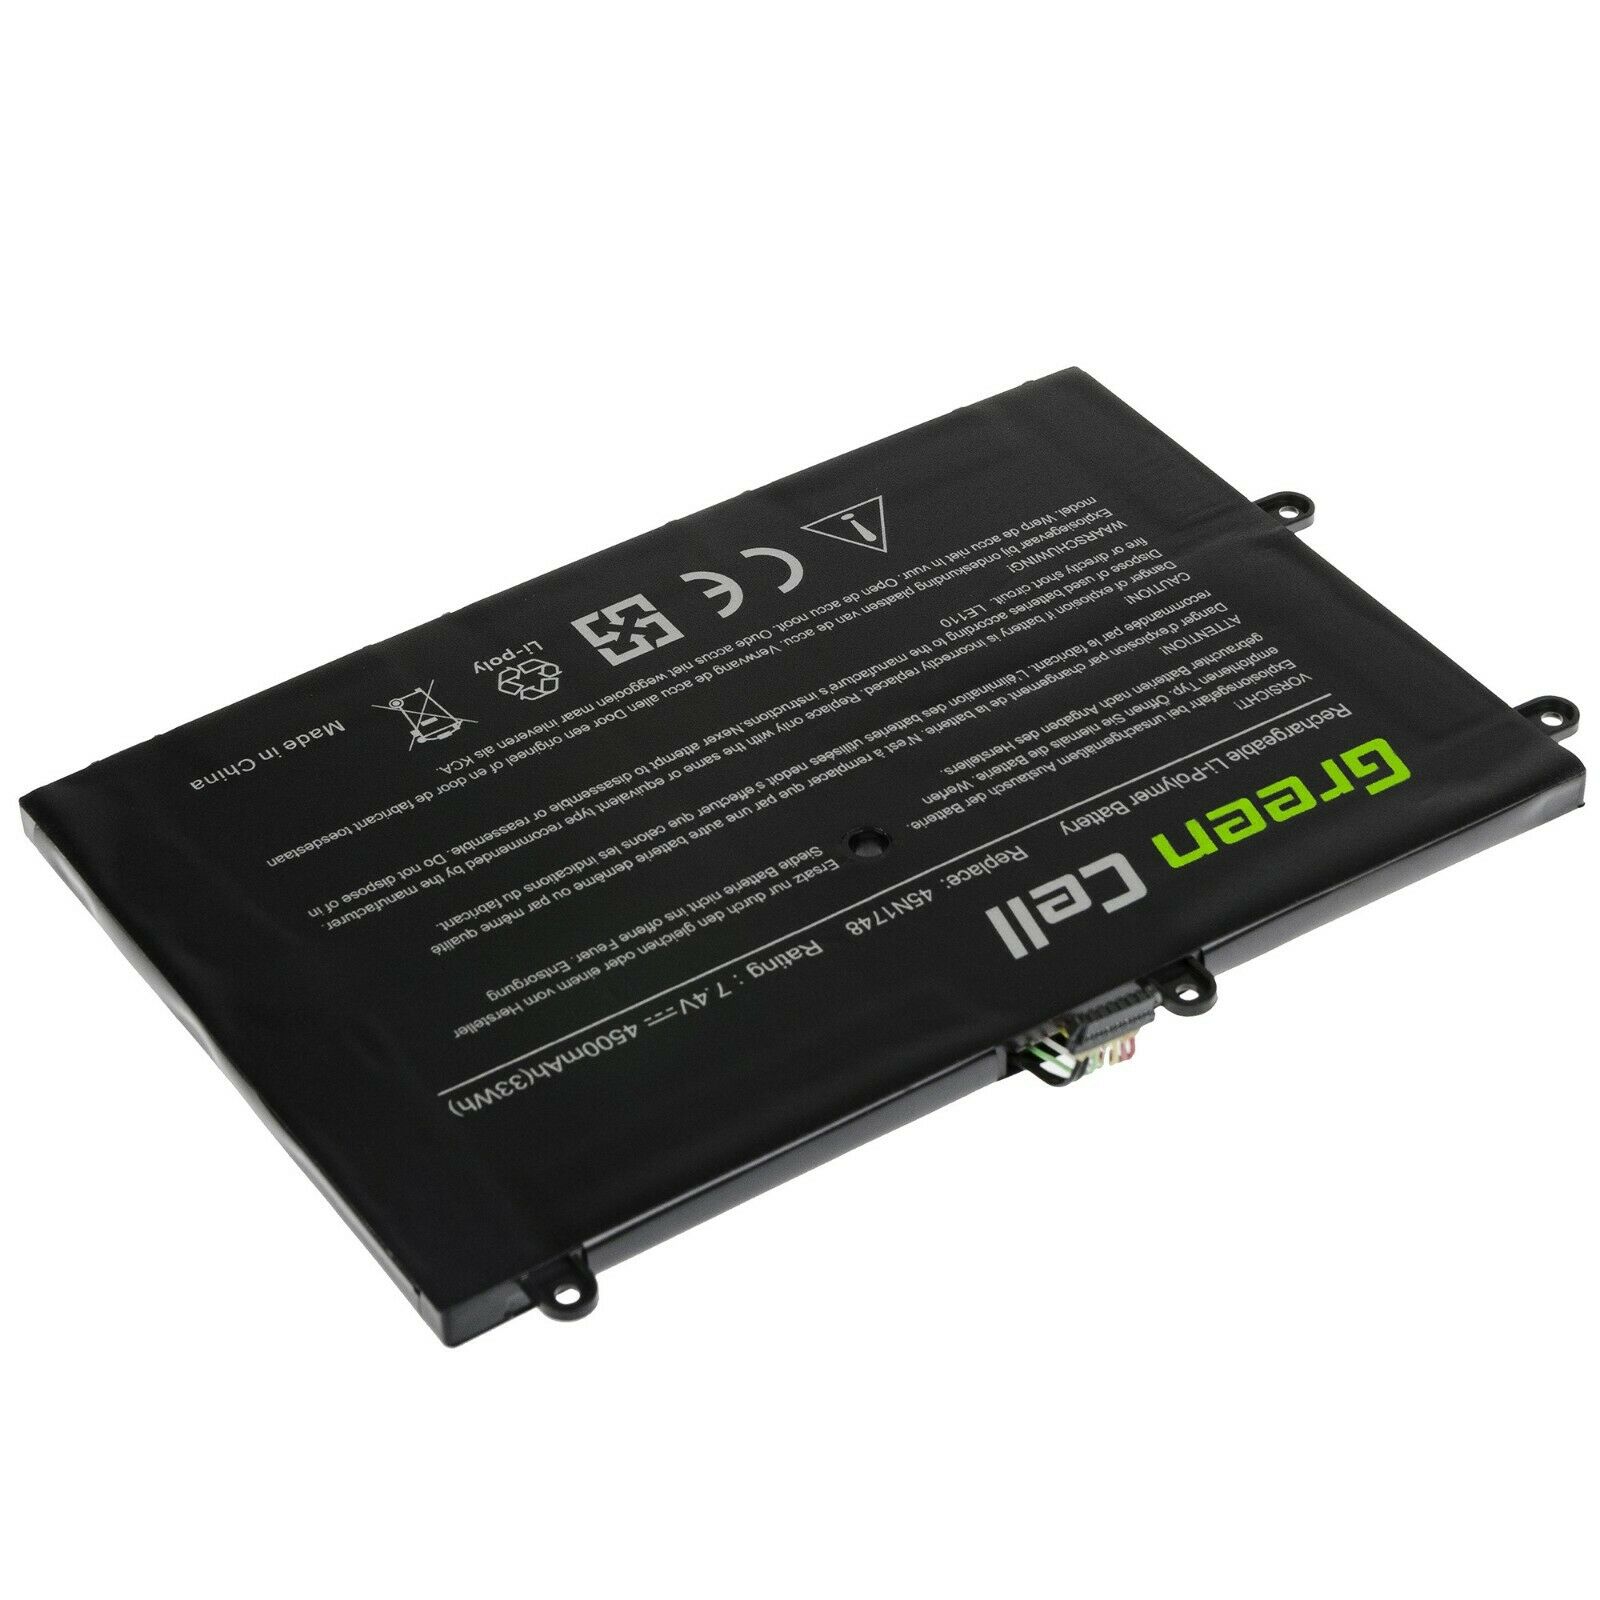 Lenovo 11e (20G9/20GB),Yoga 11e Chromebook Series,45N1748,45N1749 compatible battery